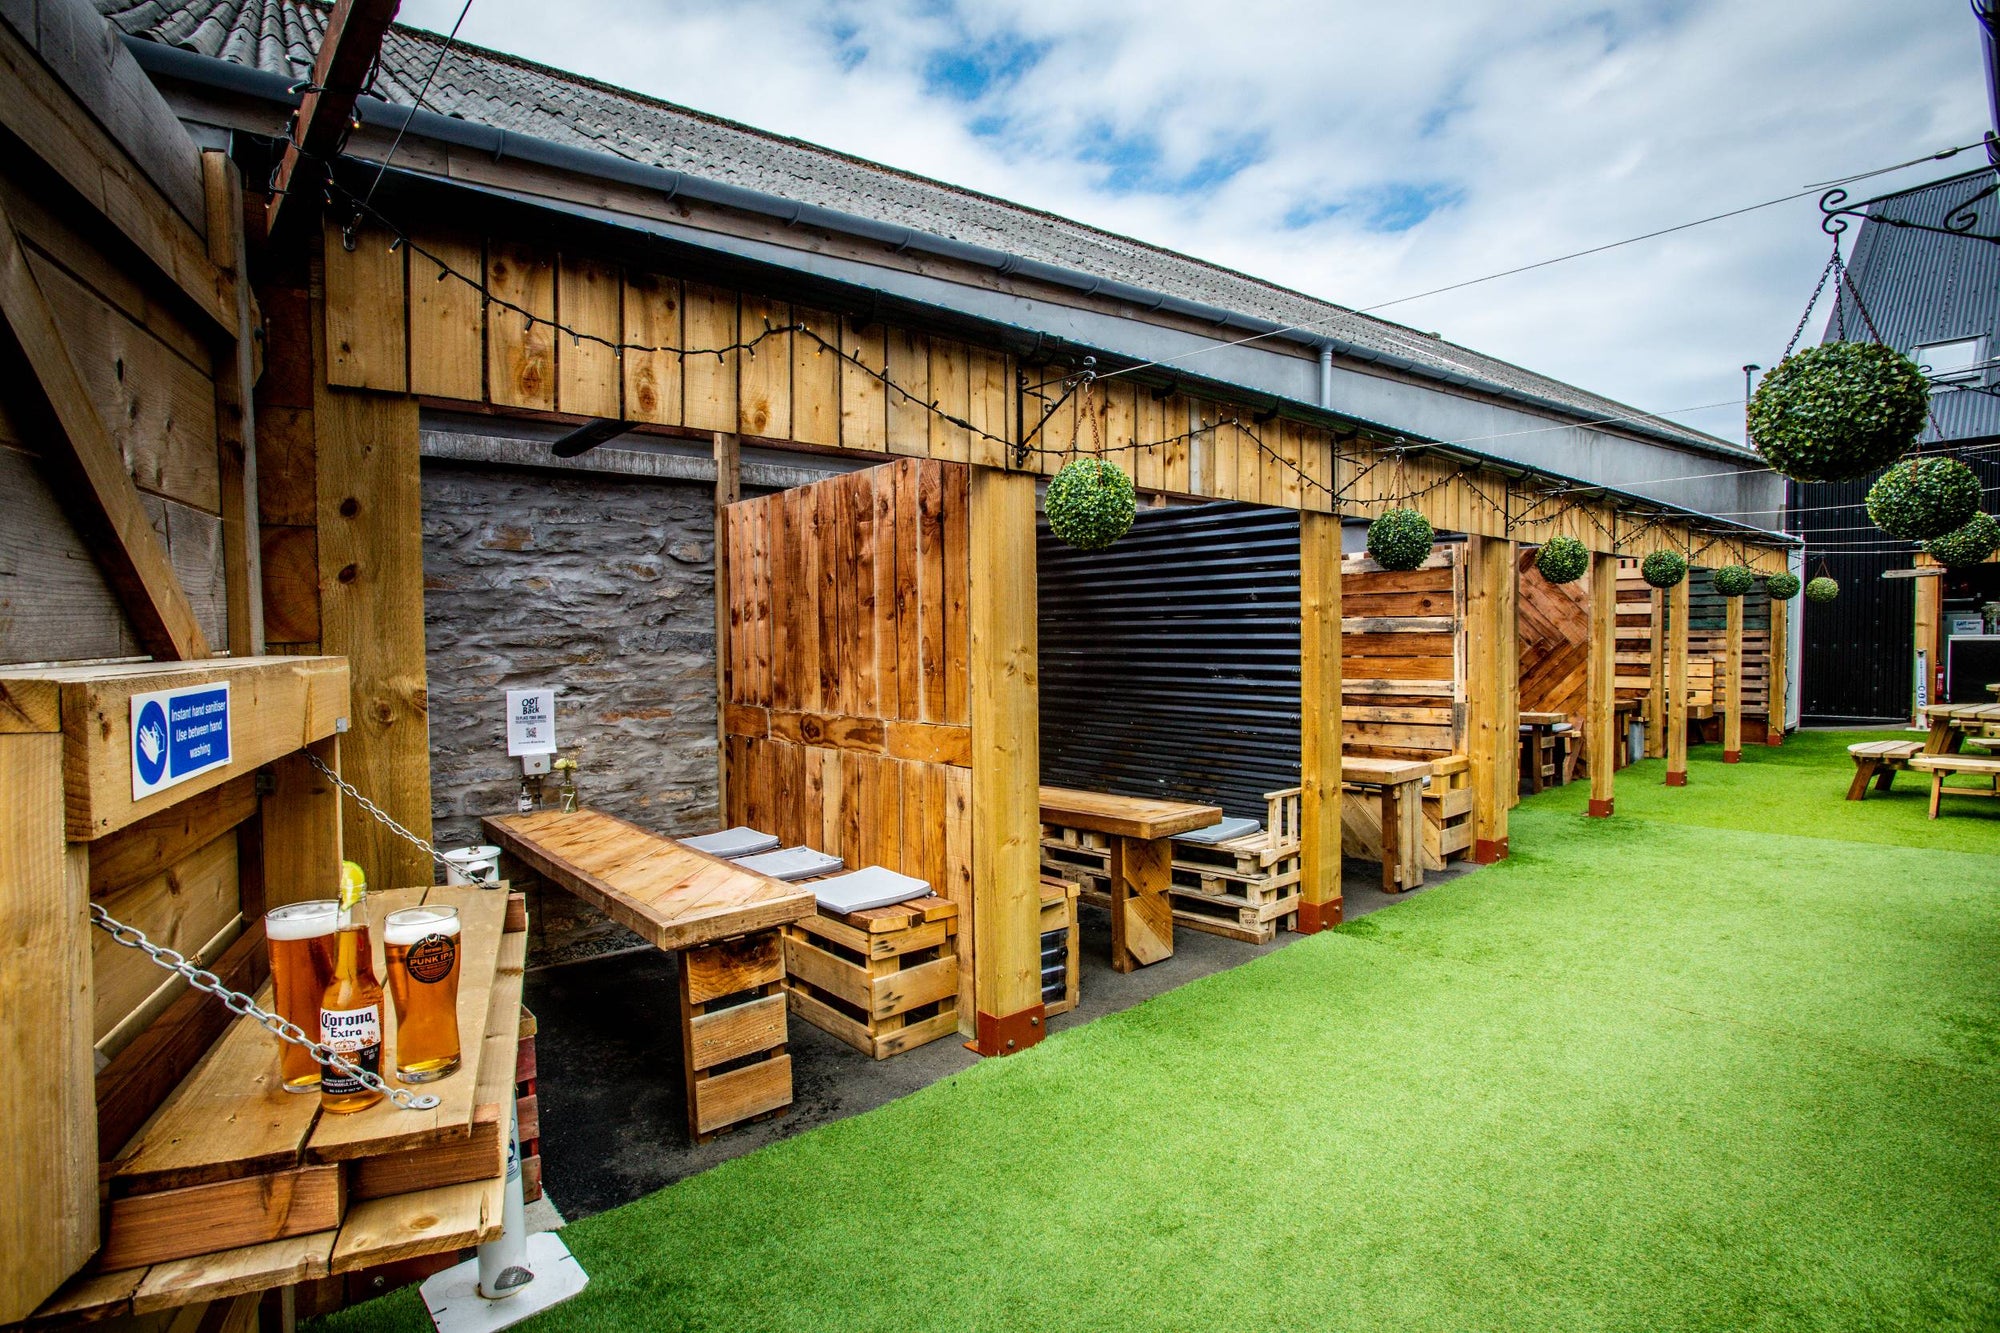 Oot the Back - Orkney Distilling's outdoor garden bar